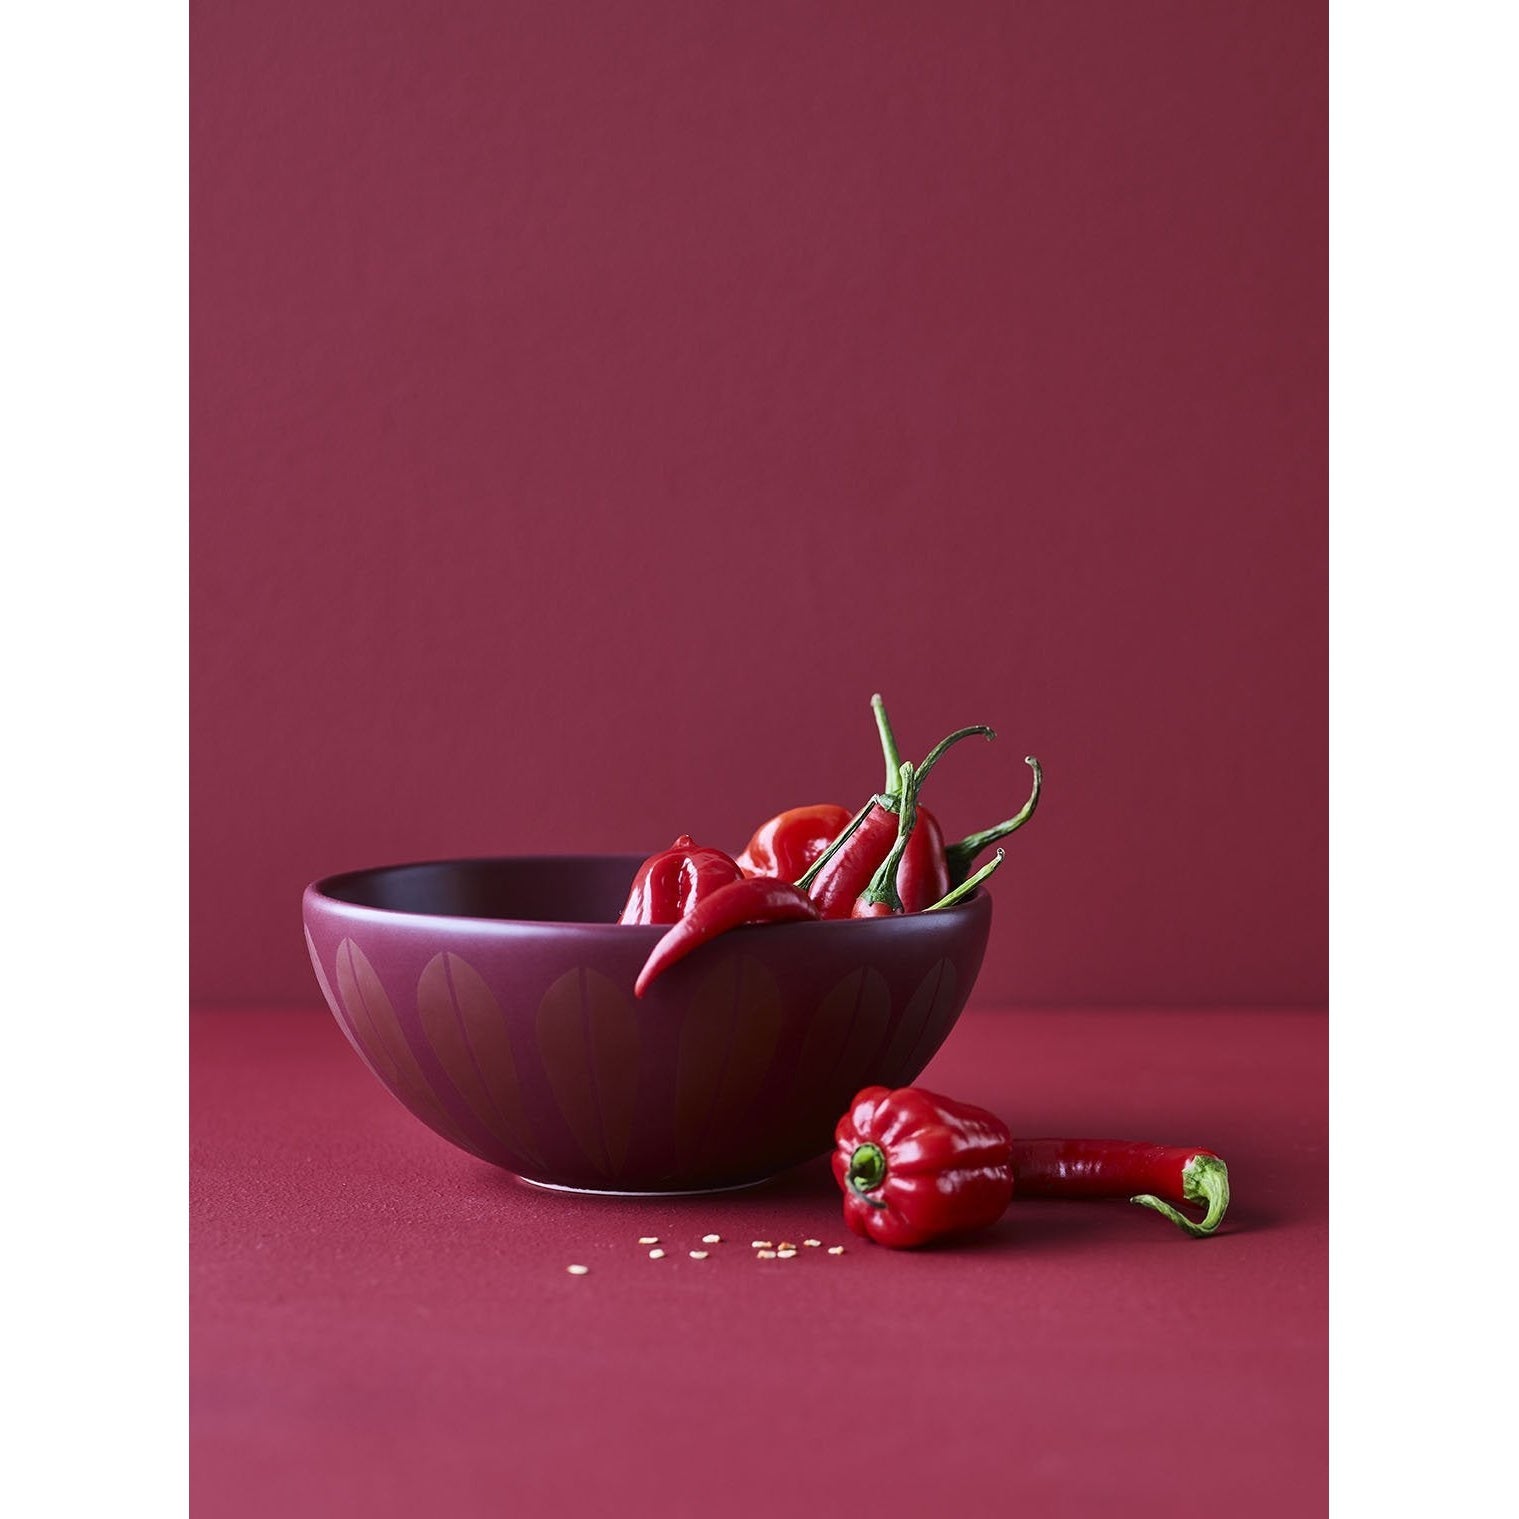 Lucie Kaas Arne Clausen Bowl rojo oscuro, 15 cm